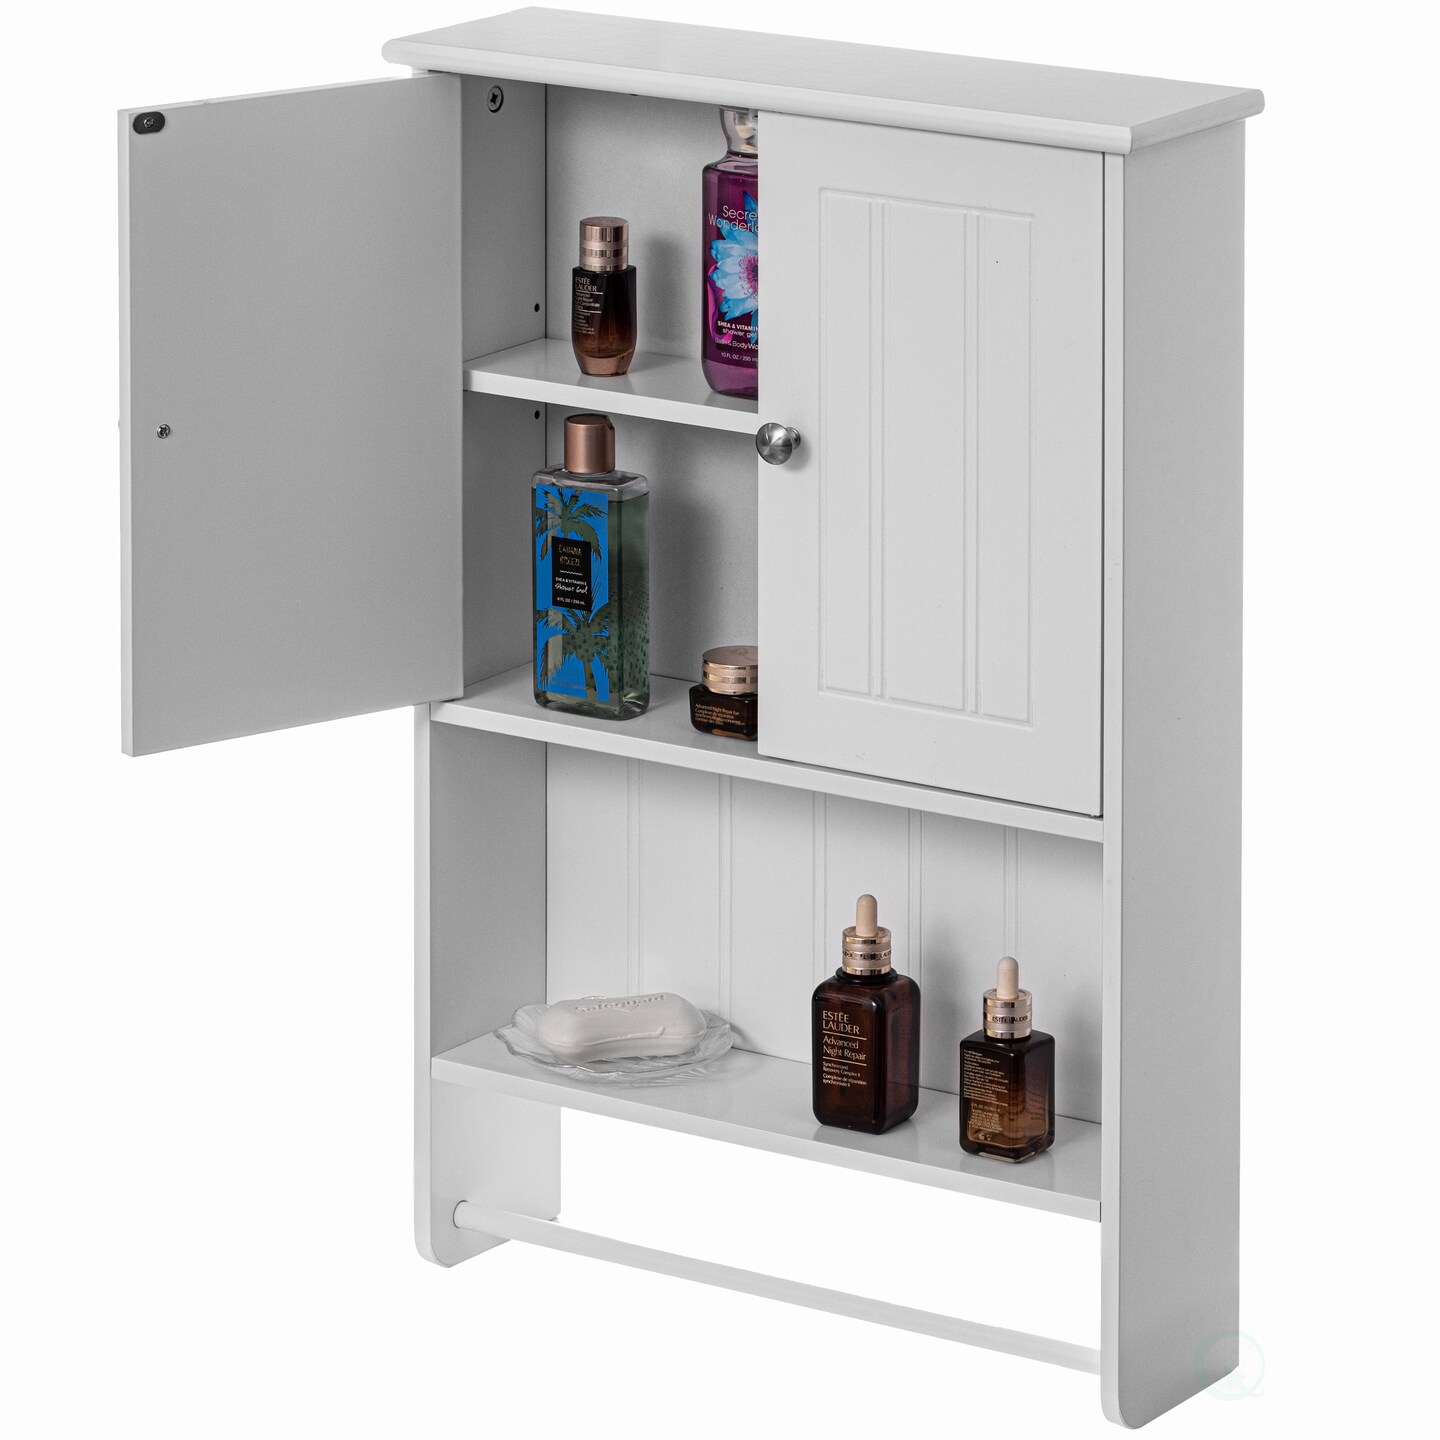 Wall Mounted Medicine Storage Cabinet Bathroom Organizer Cupboard